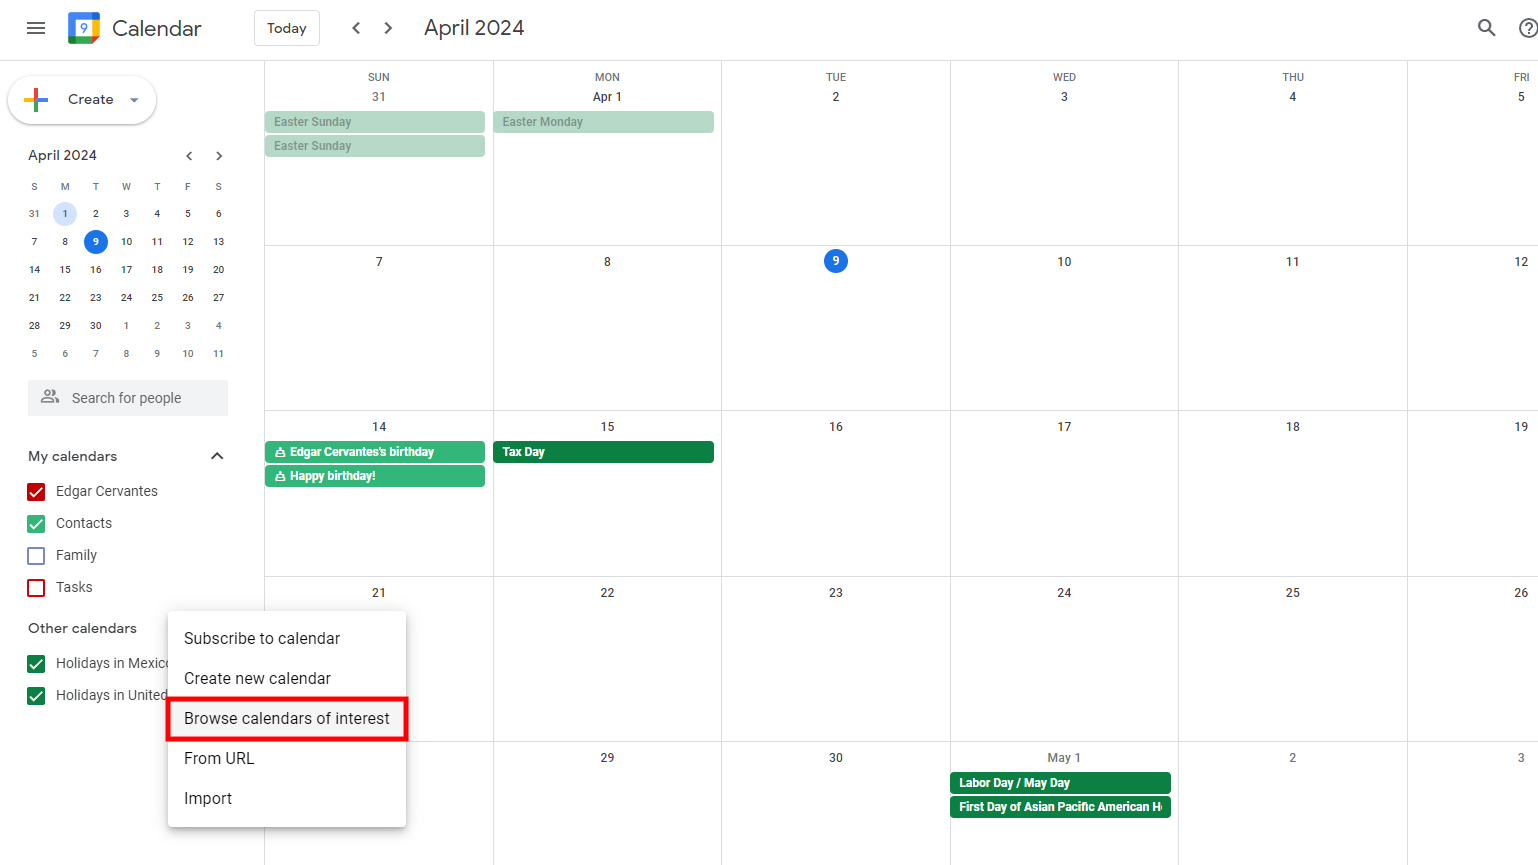 Browse calendars of interest in Google Calendar (2)